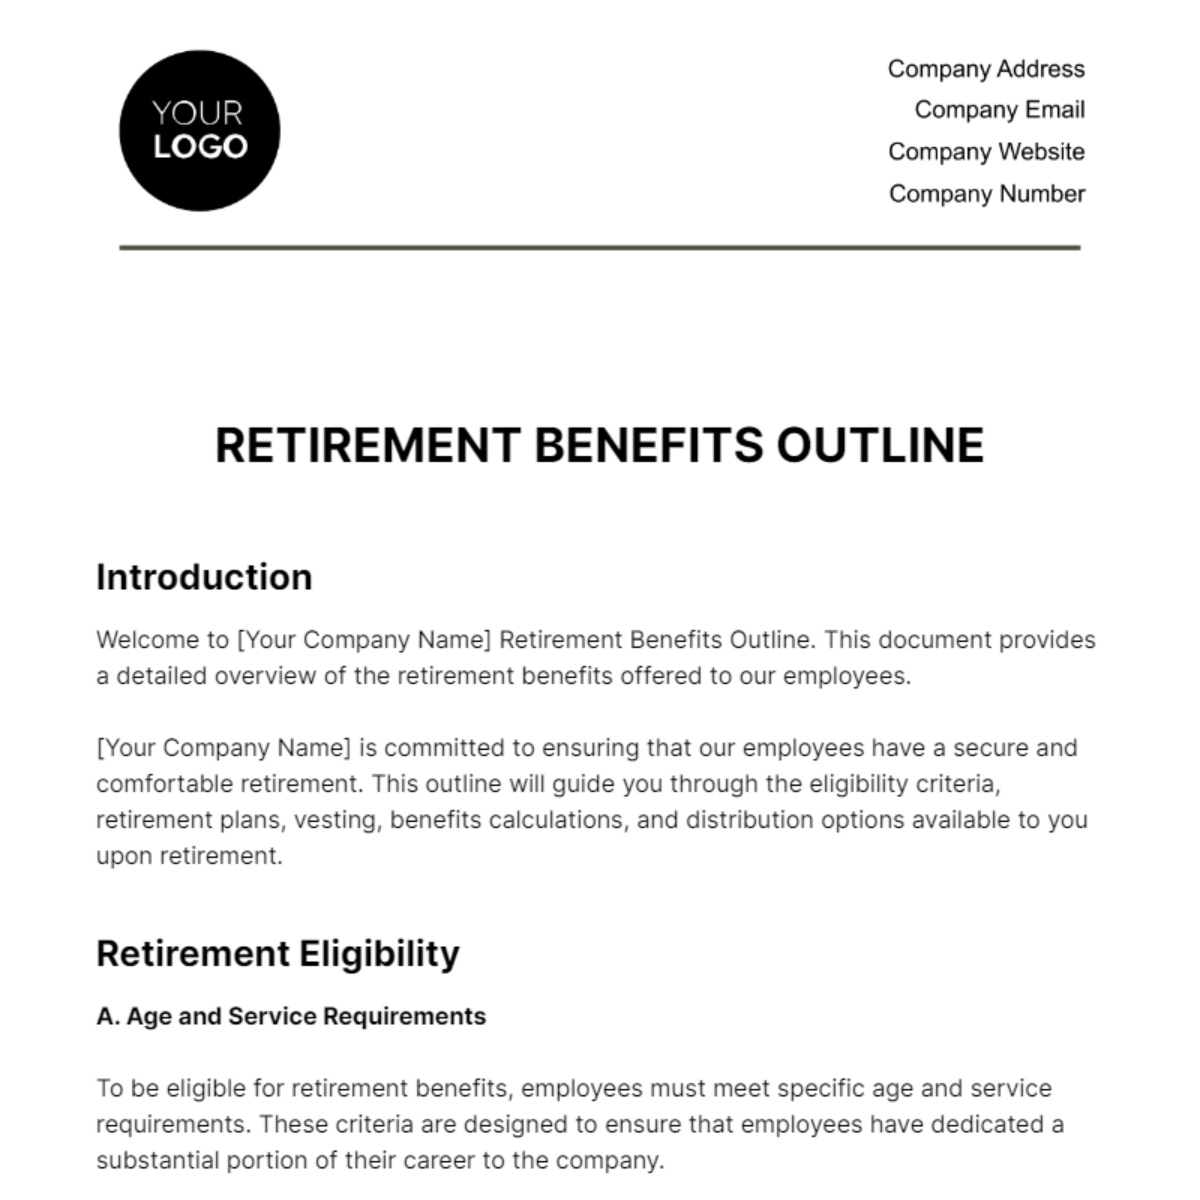 Retirement Benefits Outline HR Template